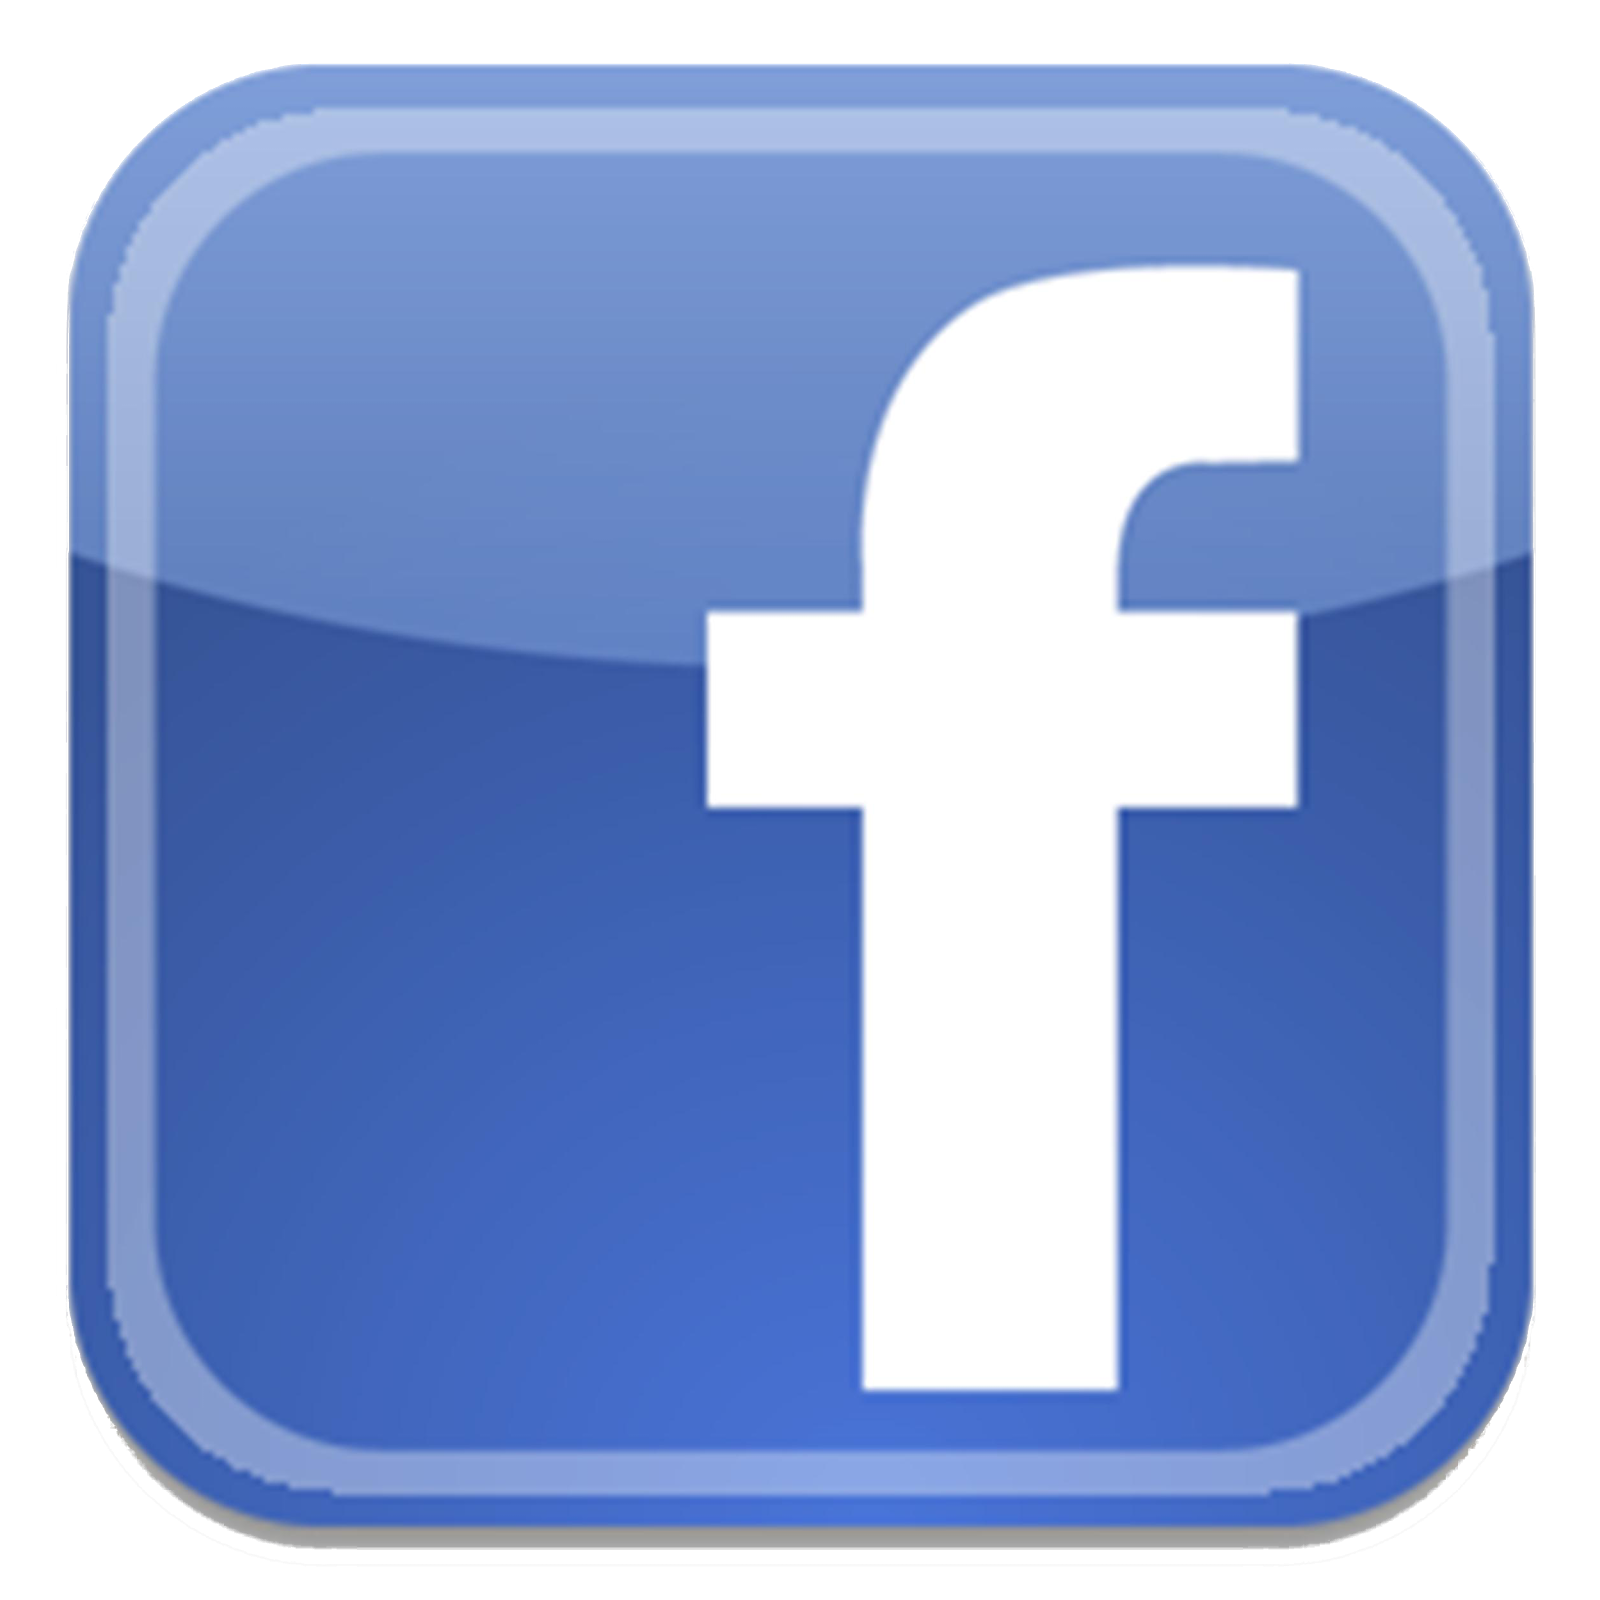 Facebook Logo Picture PNG Transparent Background, Free Download 11